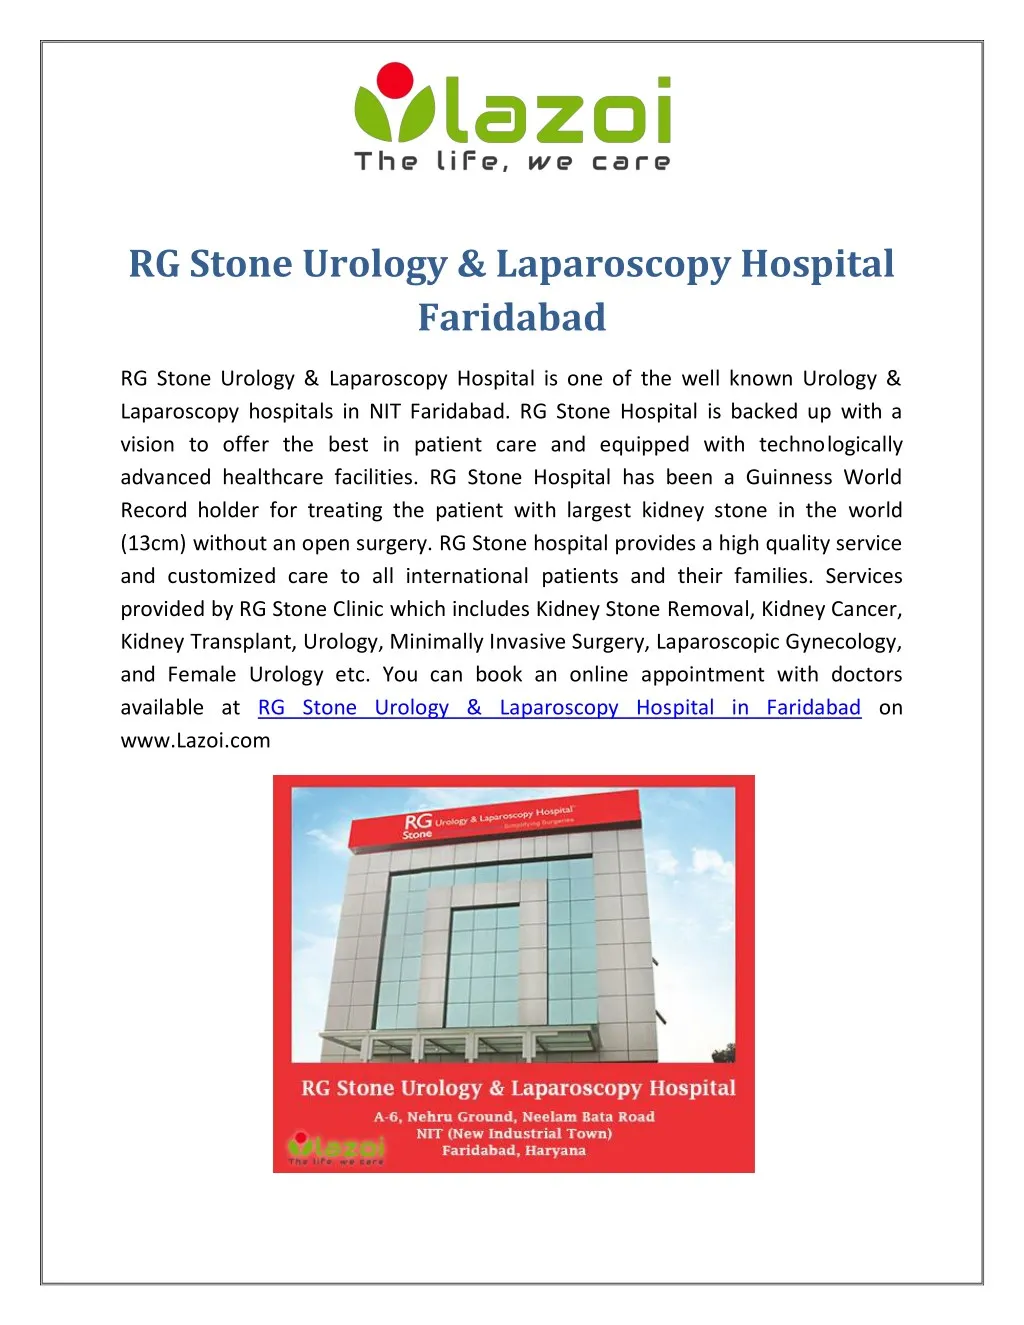 rg stone urology laparoscopy hospital faridabad